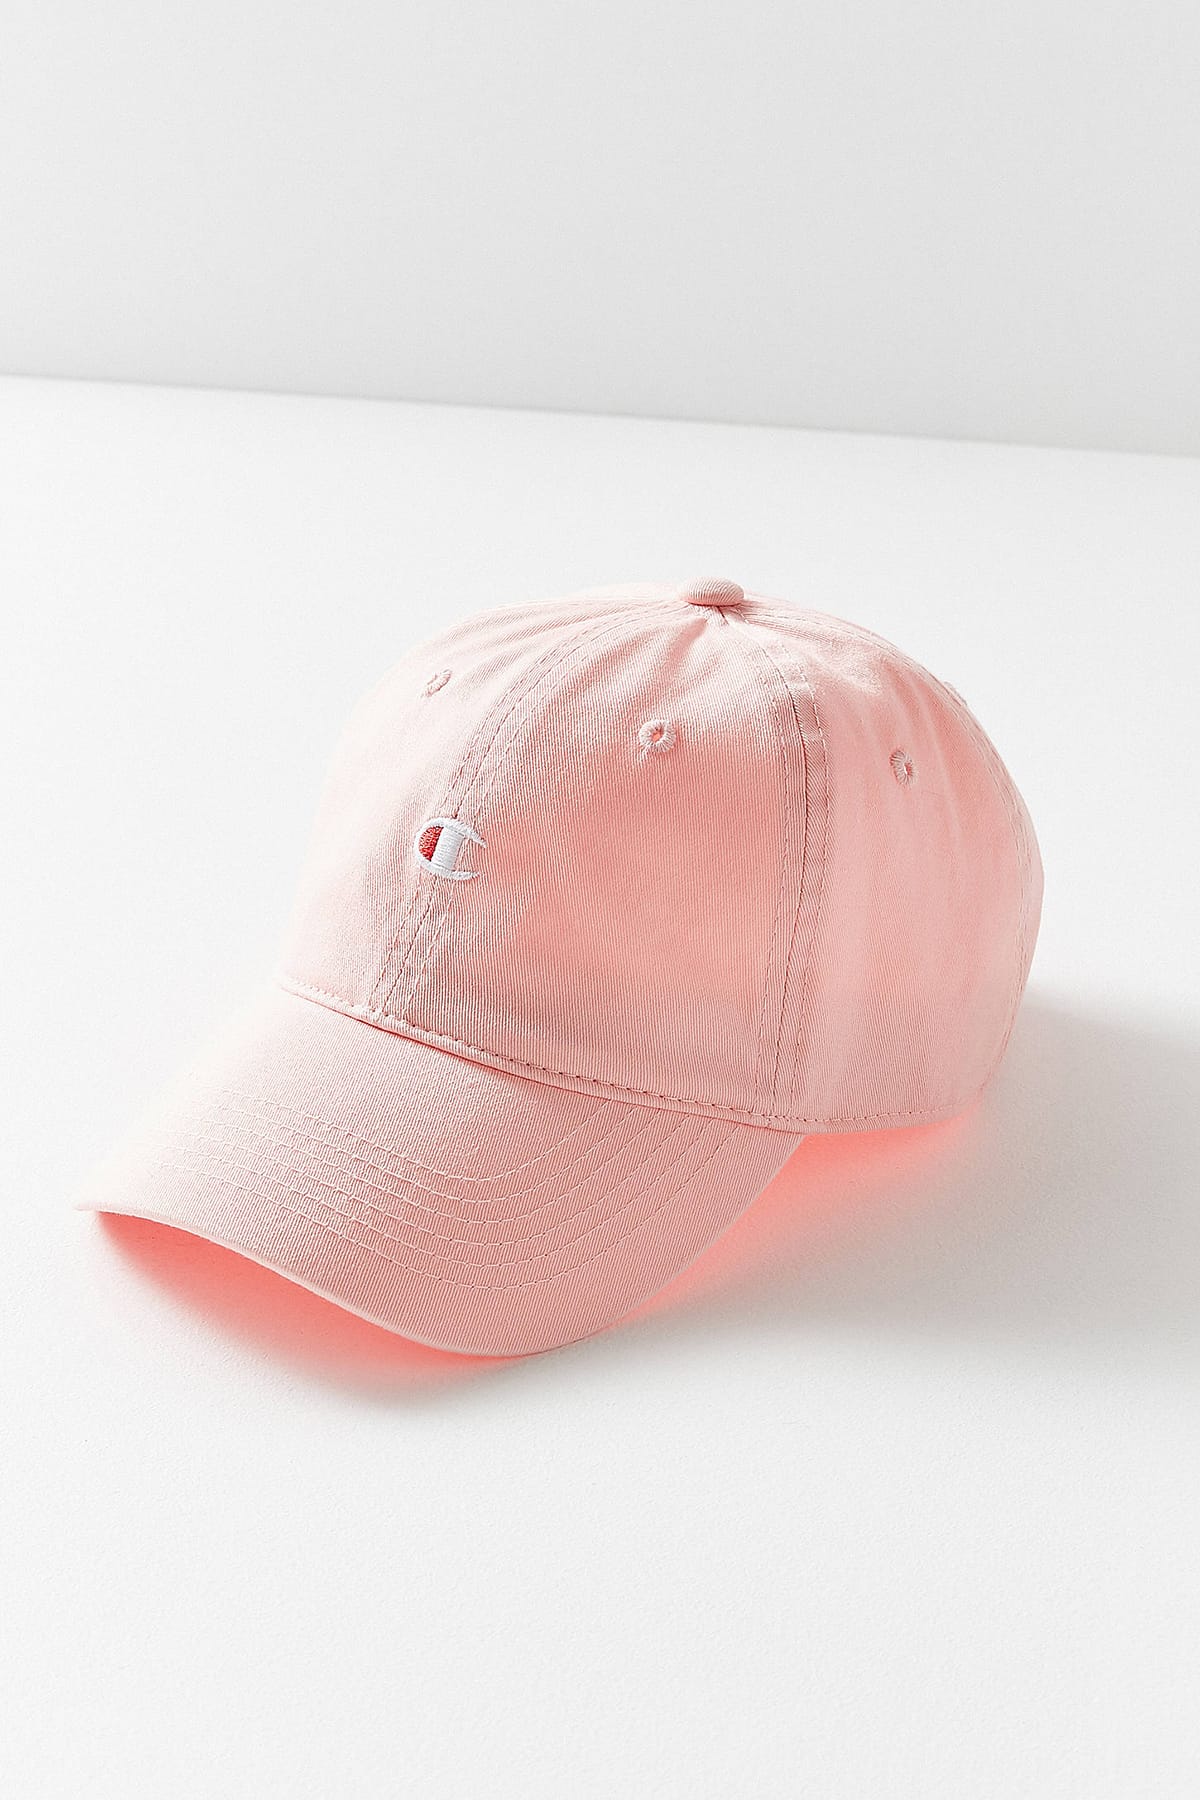 pink champion hat